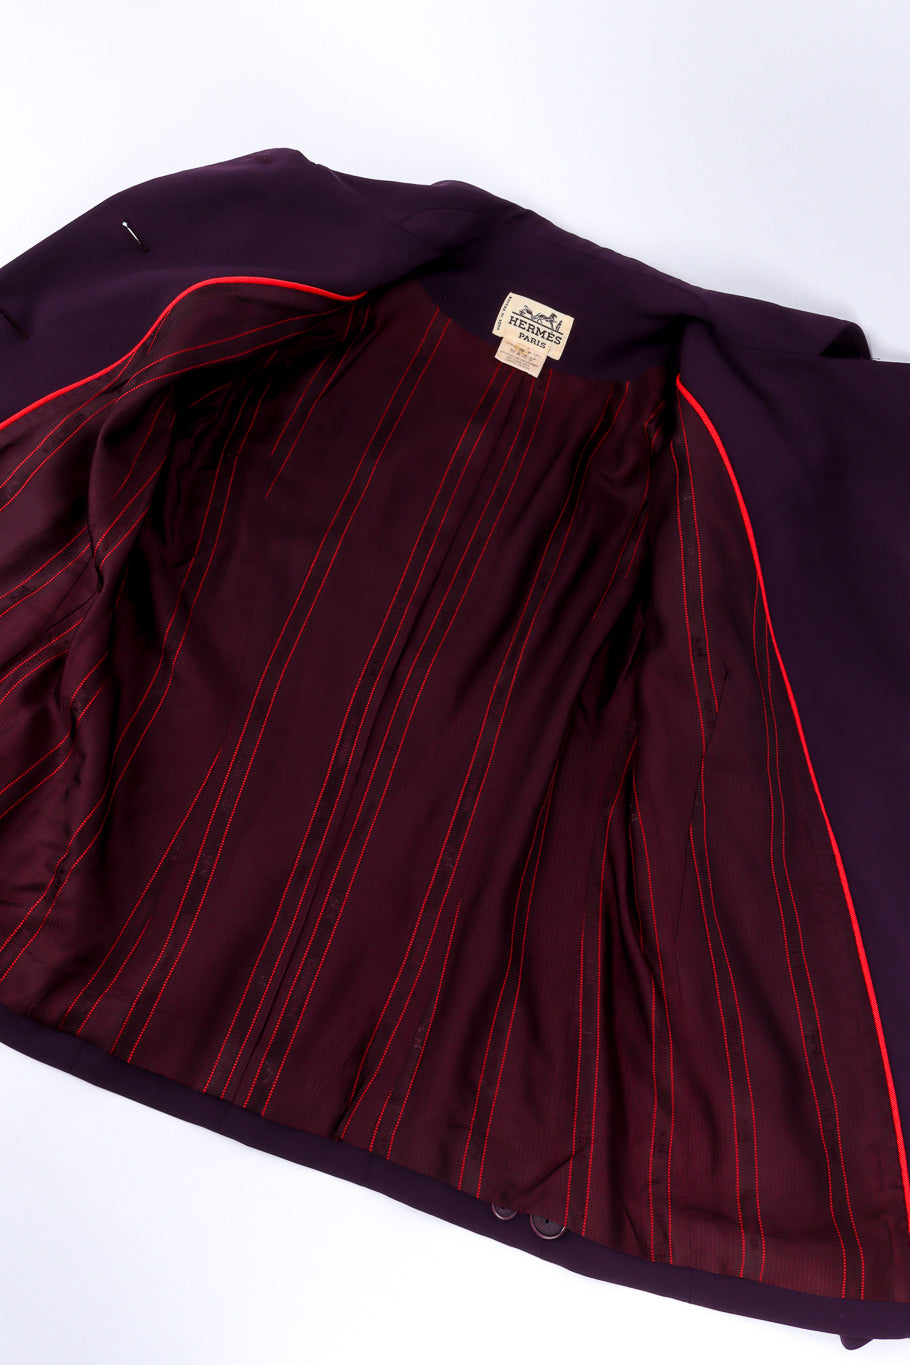 Vintage Hermés Asymmetrical Blazer and Skirt Set view of lining @recessla